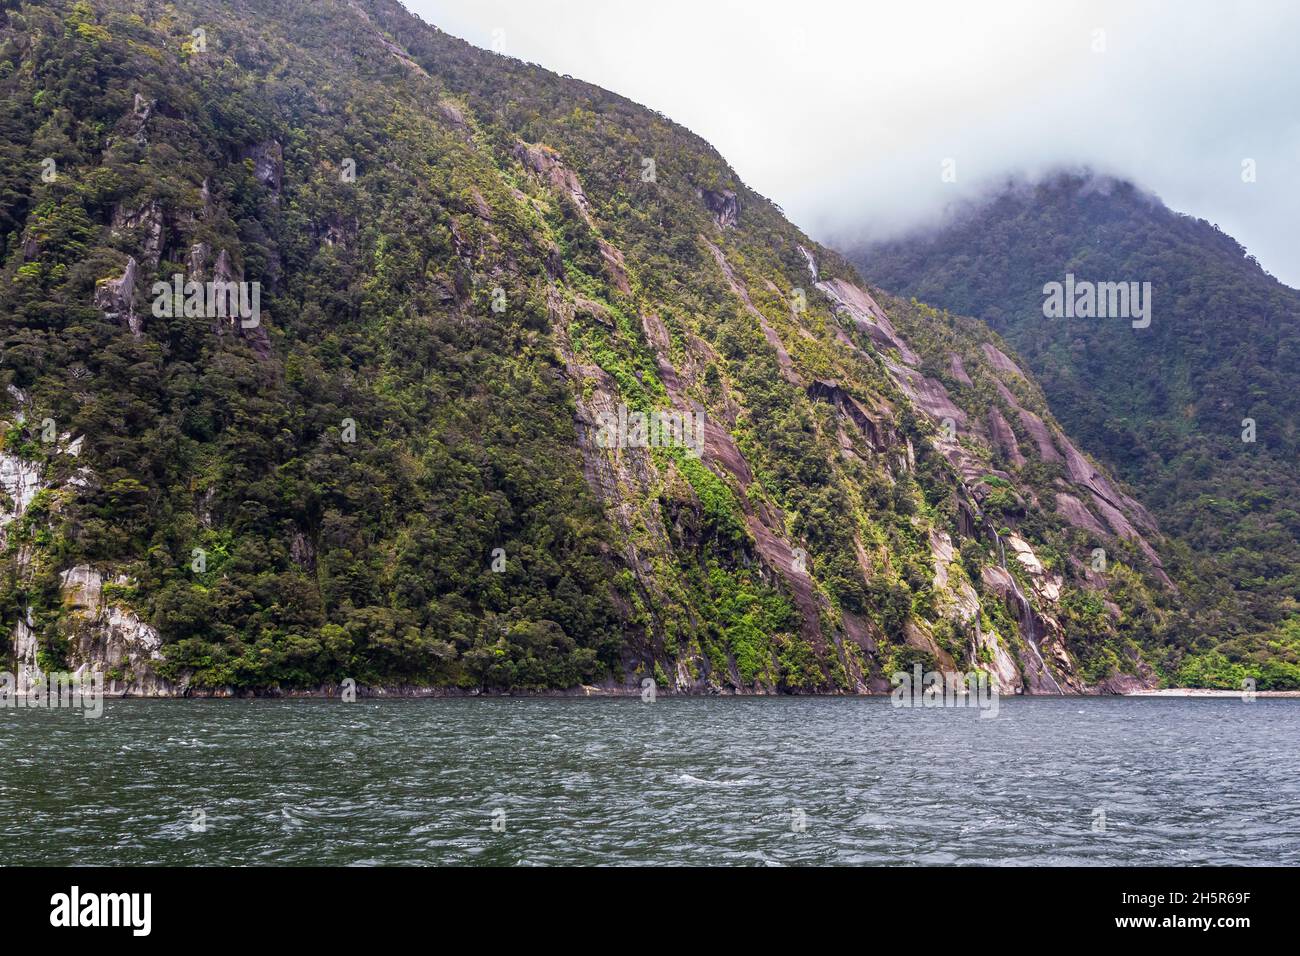 Wooded cliffs among the sea. FiordLand National Park. New Zealand Stock Photo